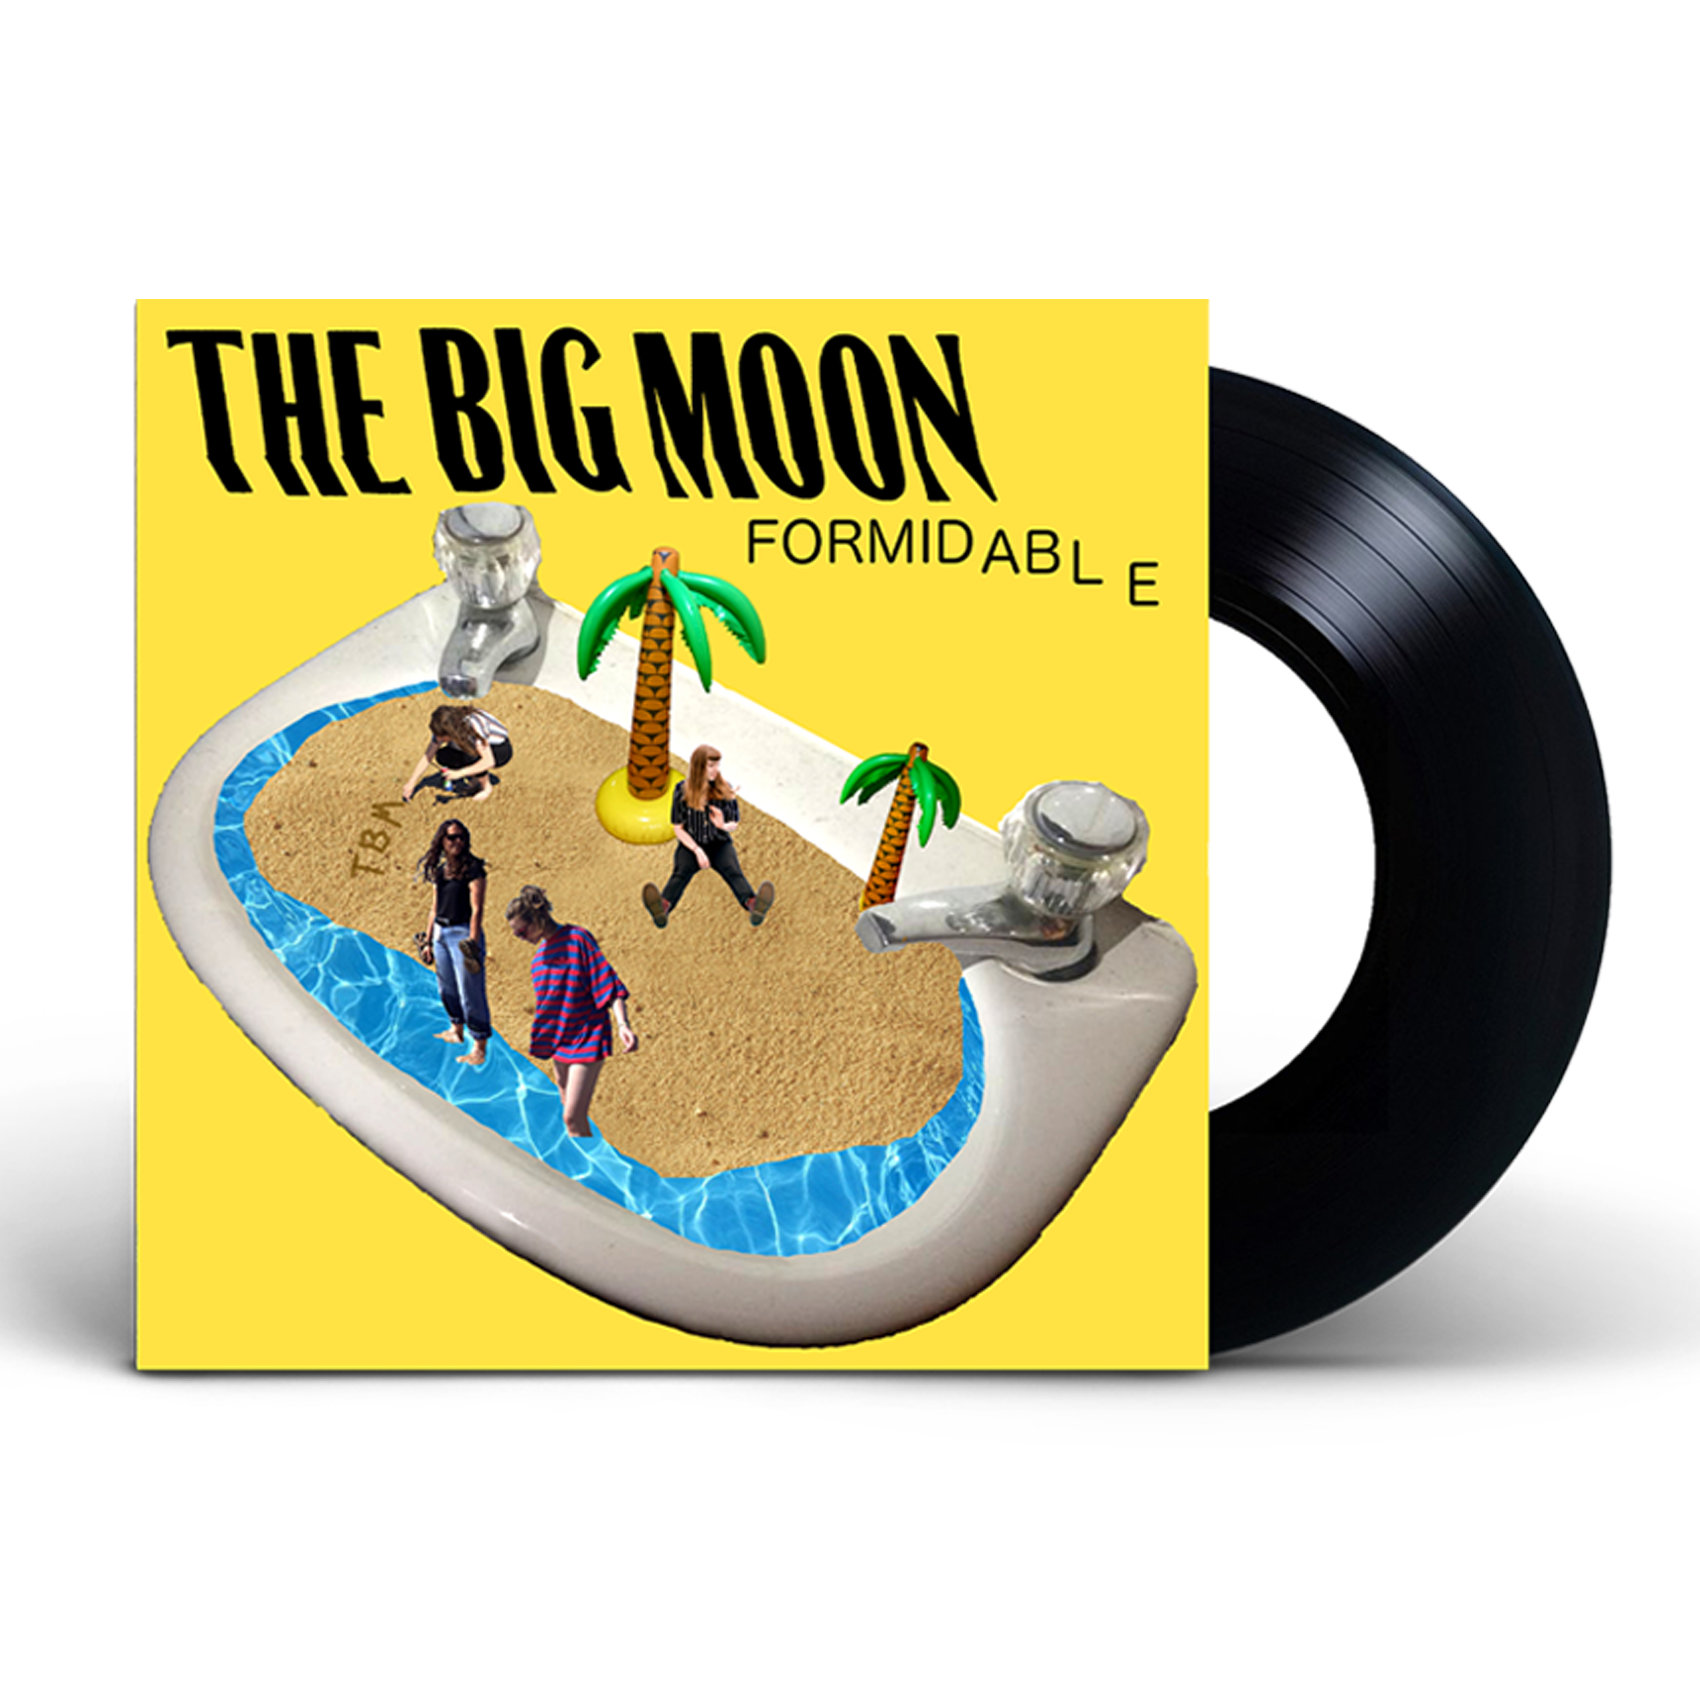 The Big Moon - Formidable: Vinyl 7" Single